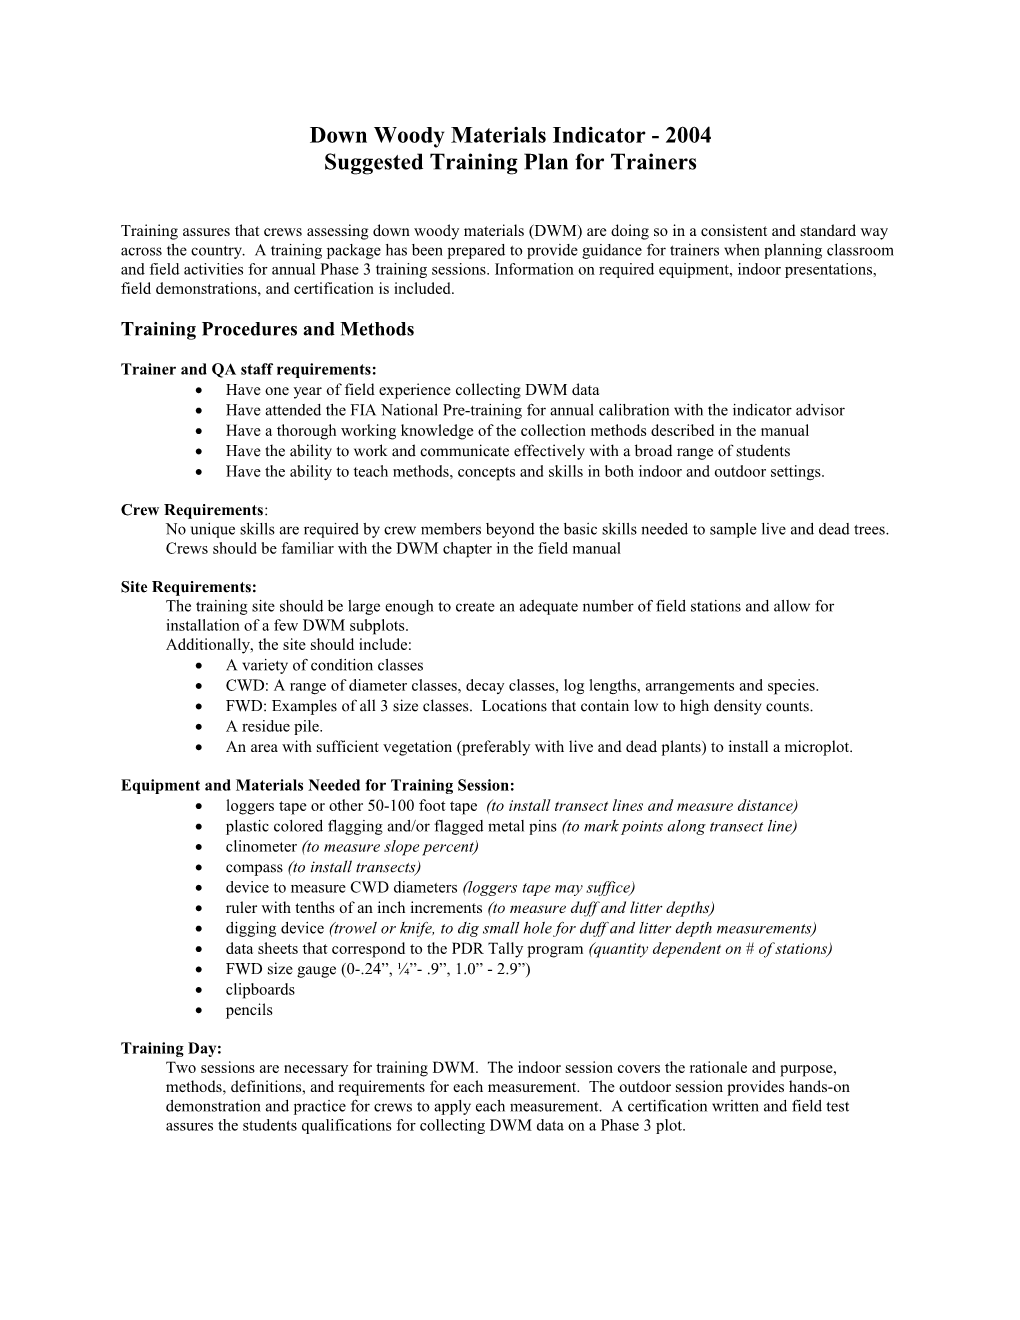 Training Procedures and Methods